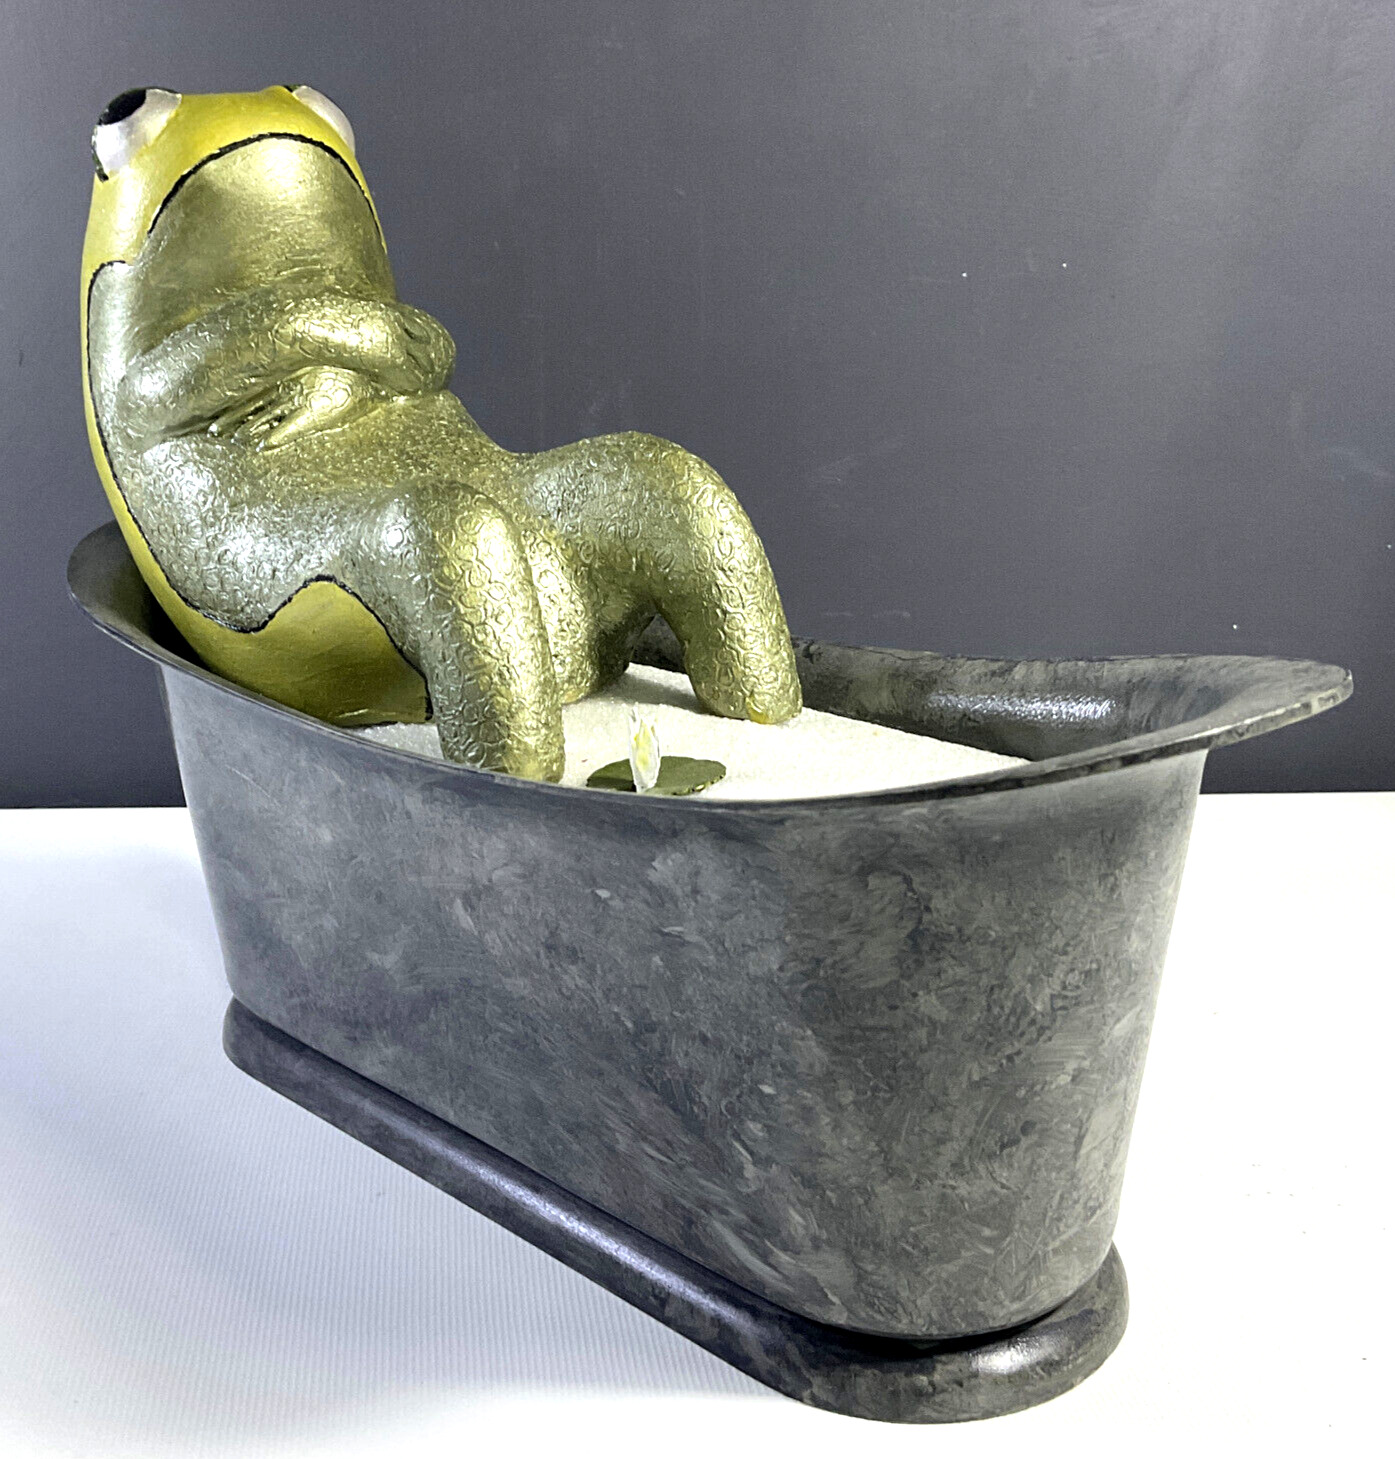 Frog in Contemplation in Bathtub Sculpture by Ken Beerbohn